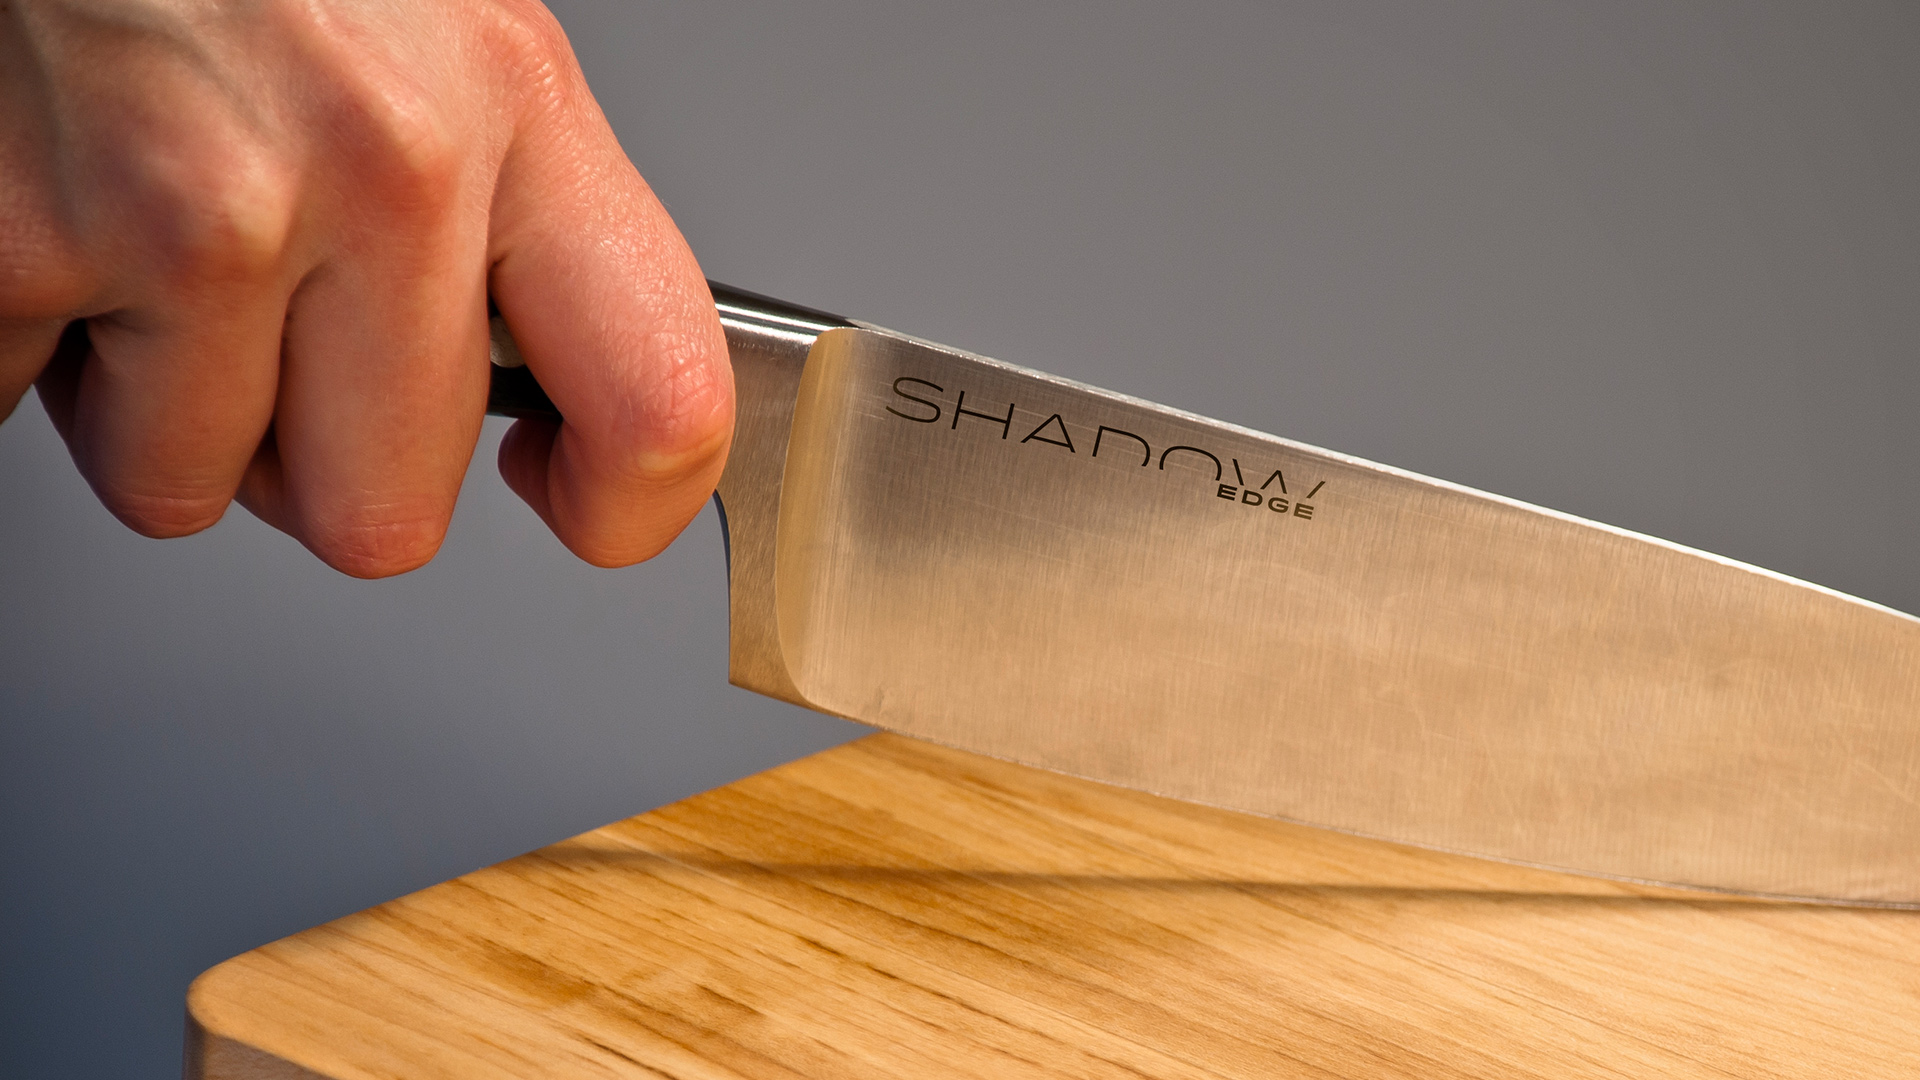 Chefworks Shadow Edge Knife Branding logo on knife